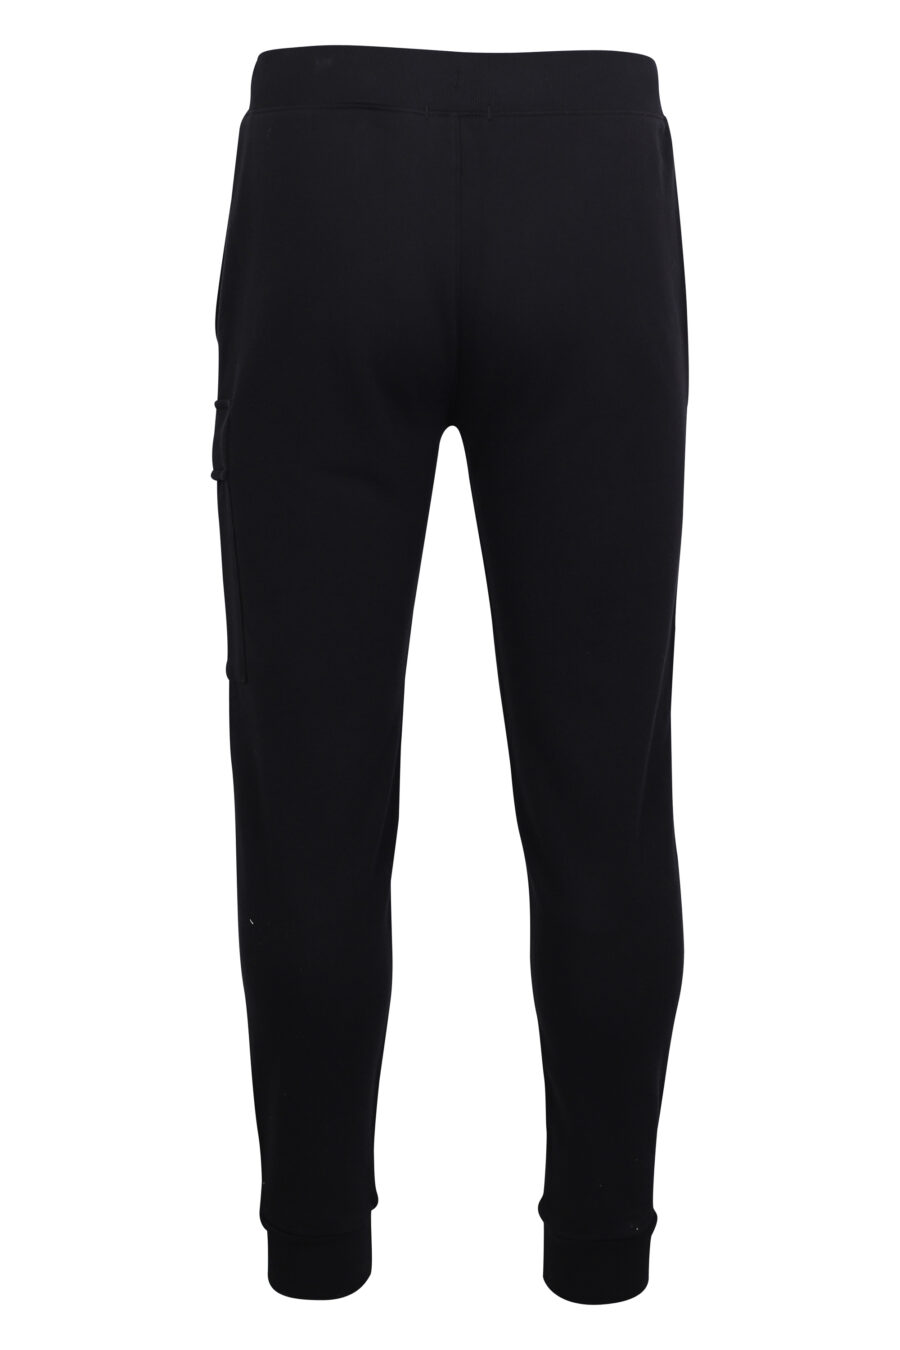 Pantalón negro cargo con bolsillos diagonales y minilogo circular - IMG 2474